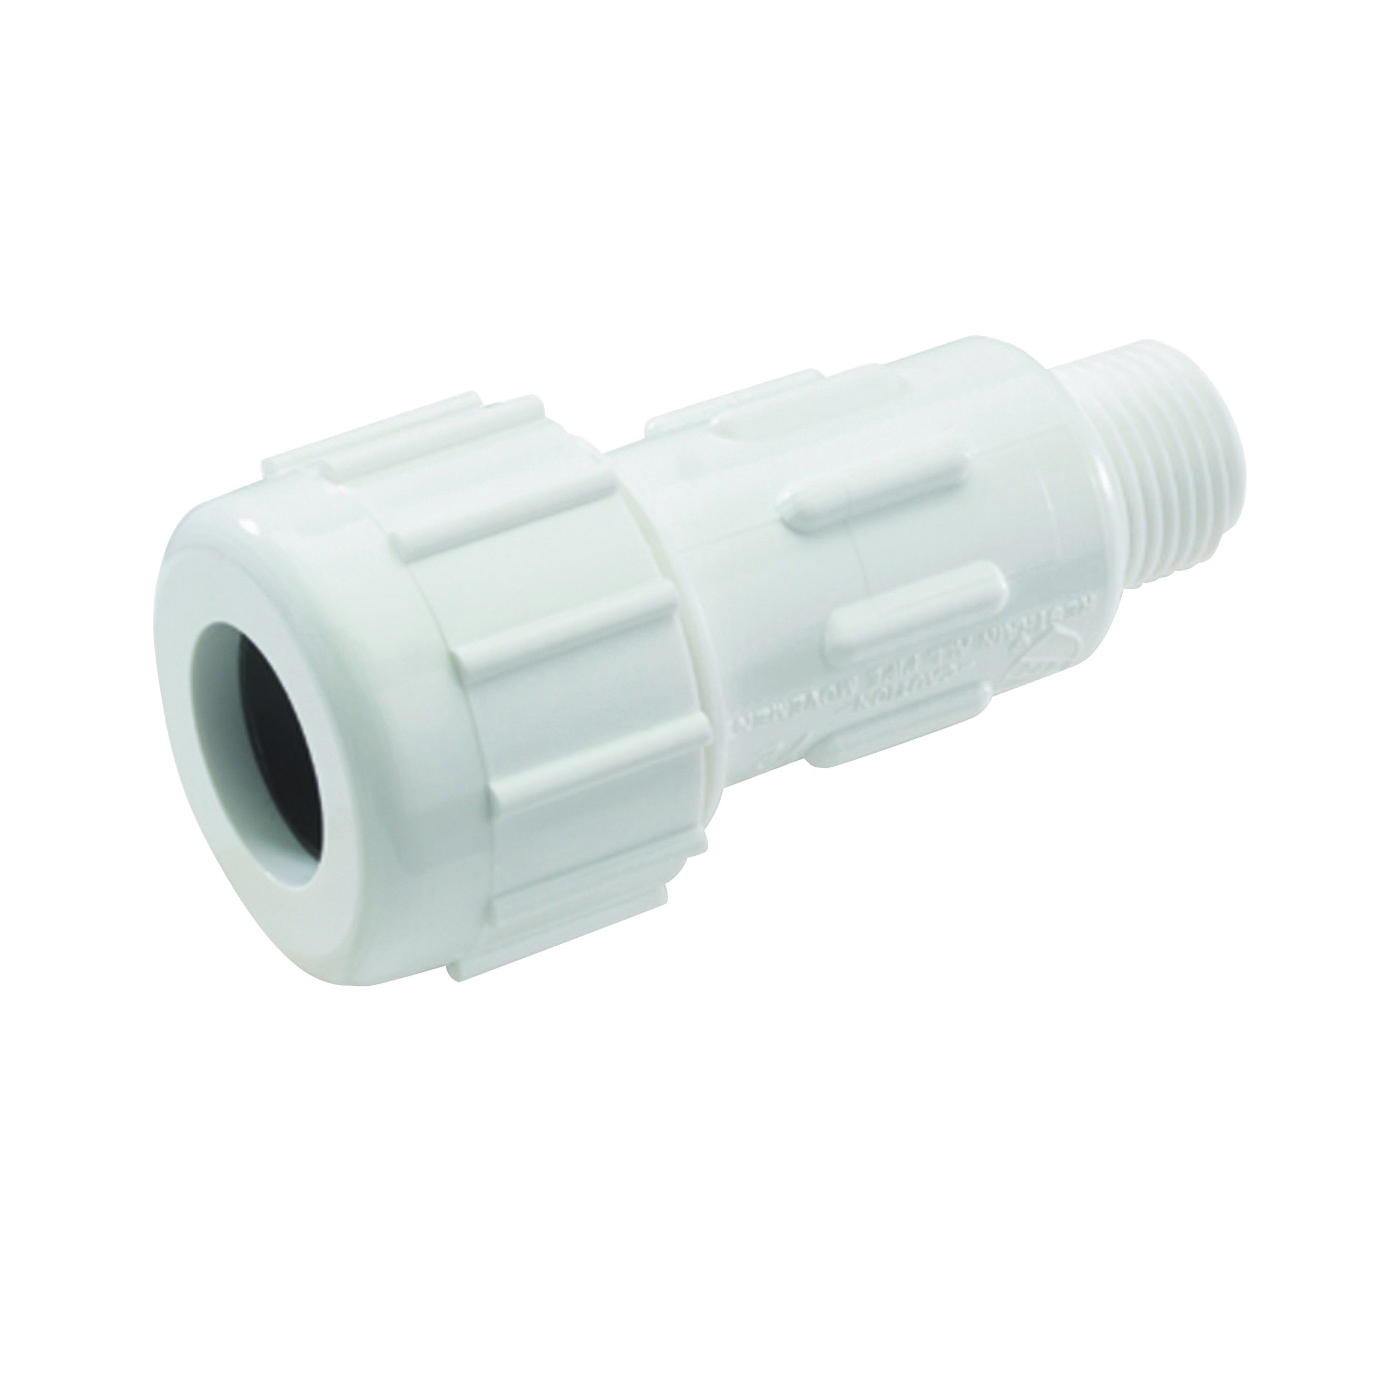 NDS CPA-1500 Pipe Adapter, 1-1/2 in, Compression x MPT, PVC, White, SCH 40 Schedule, 150 psi Pressure